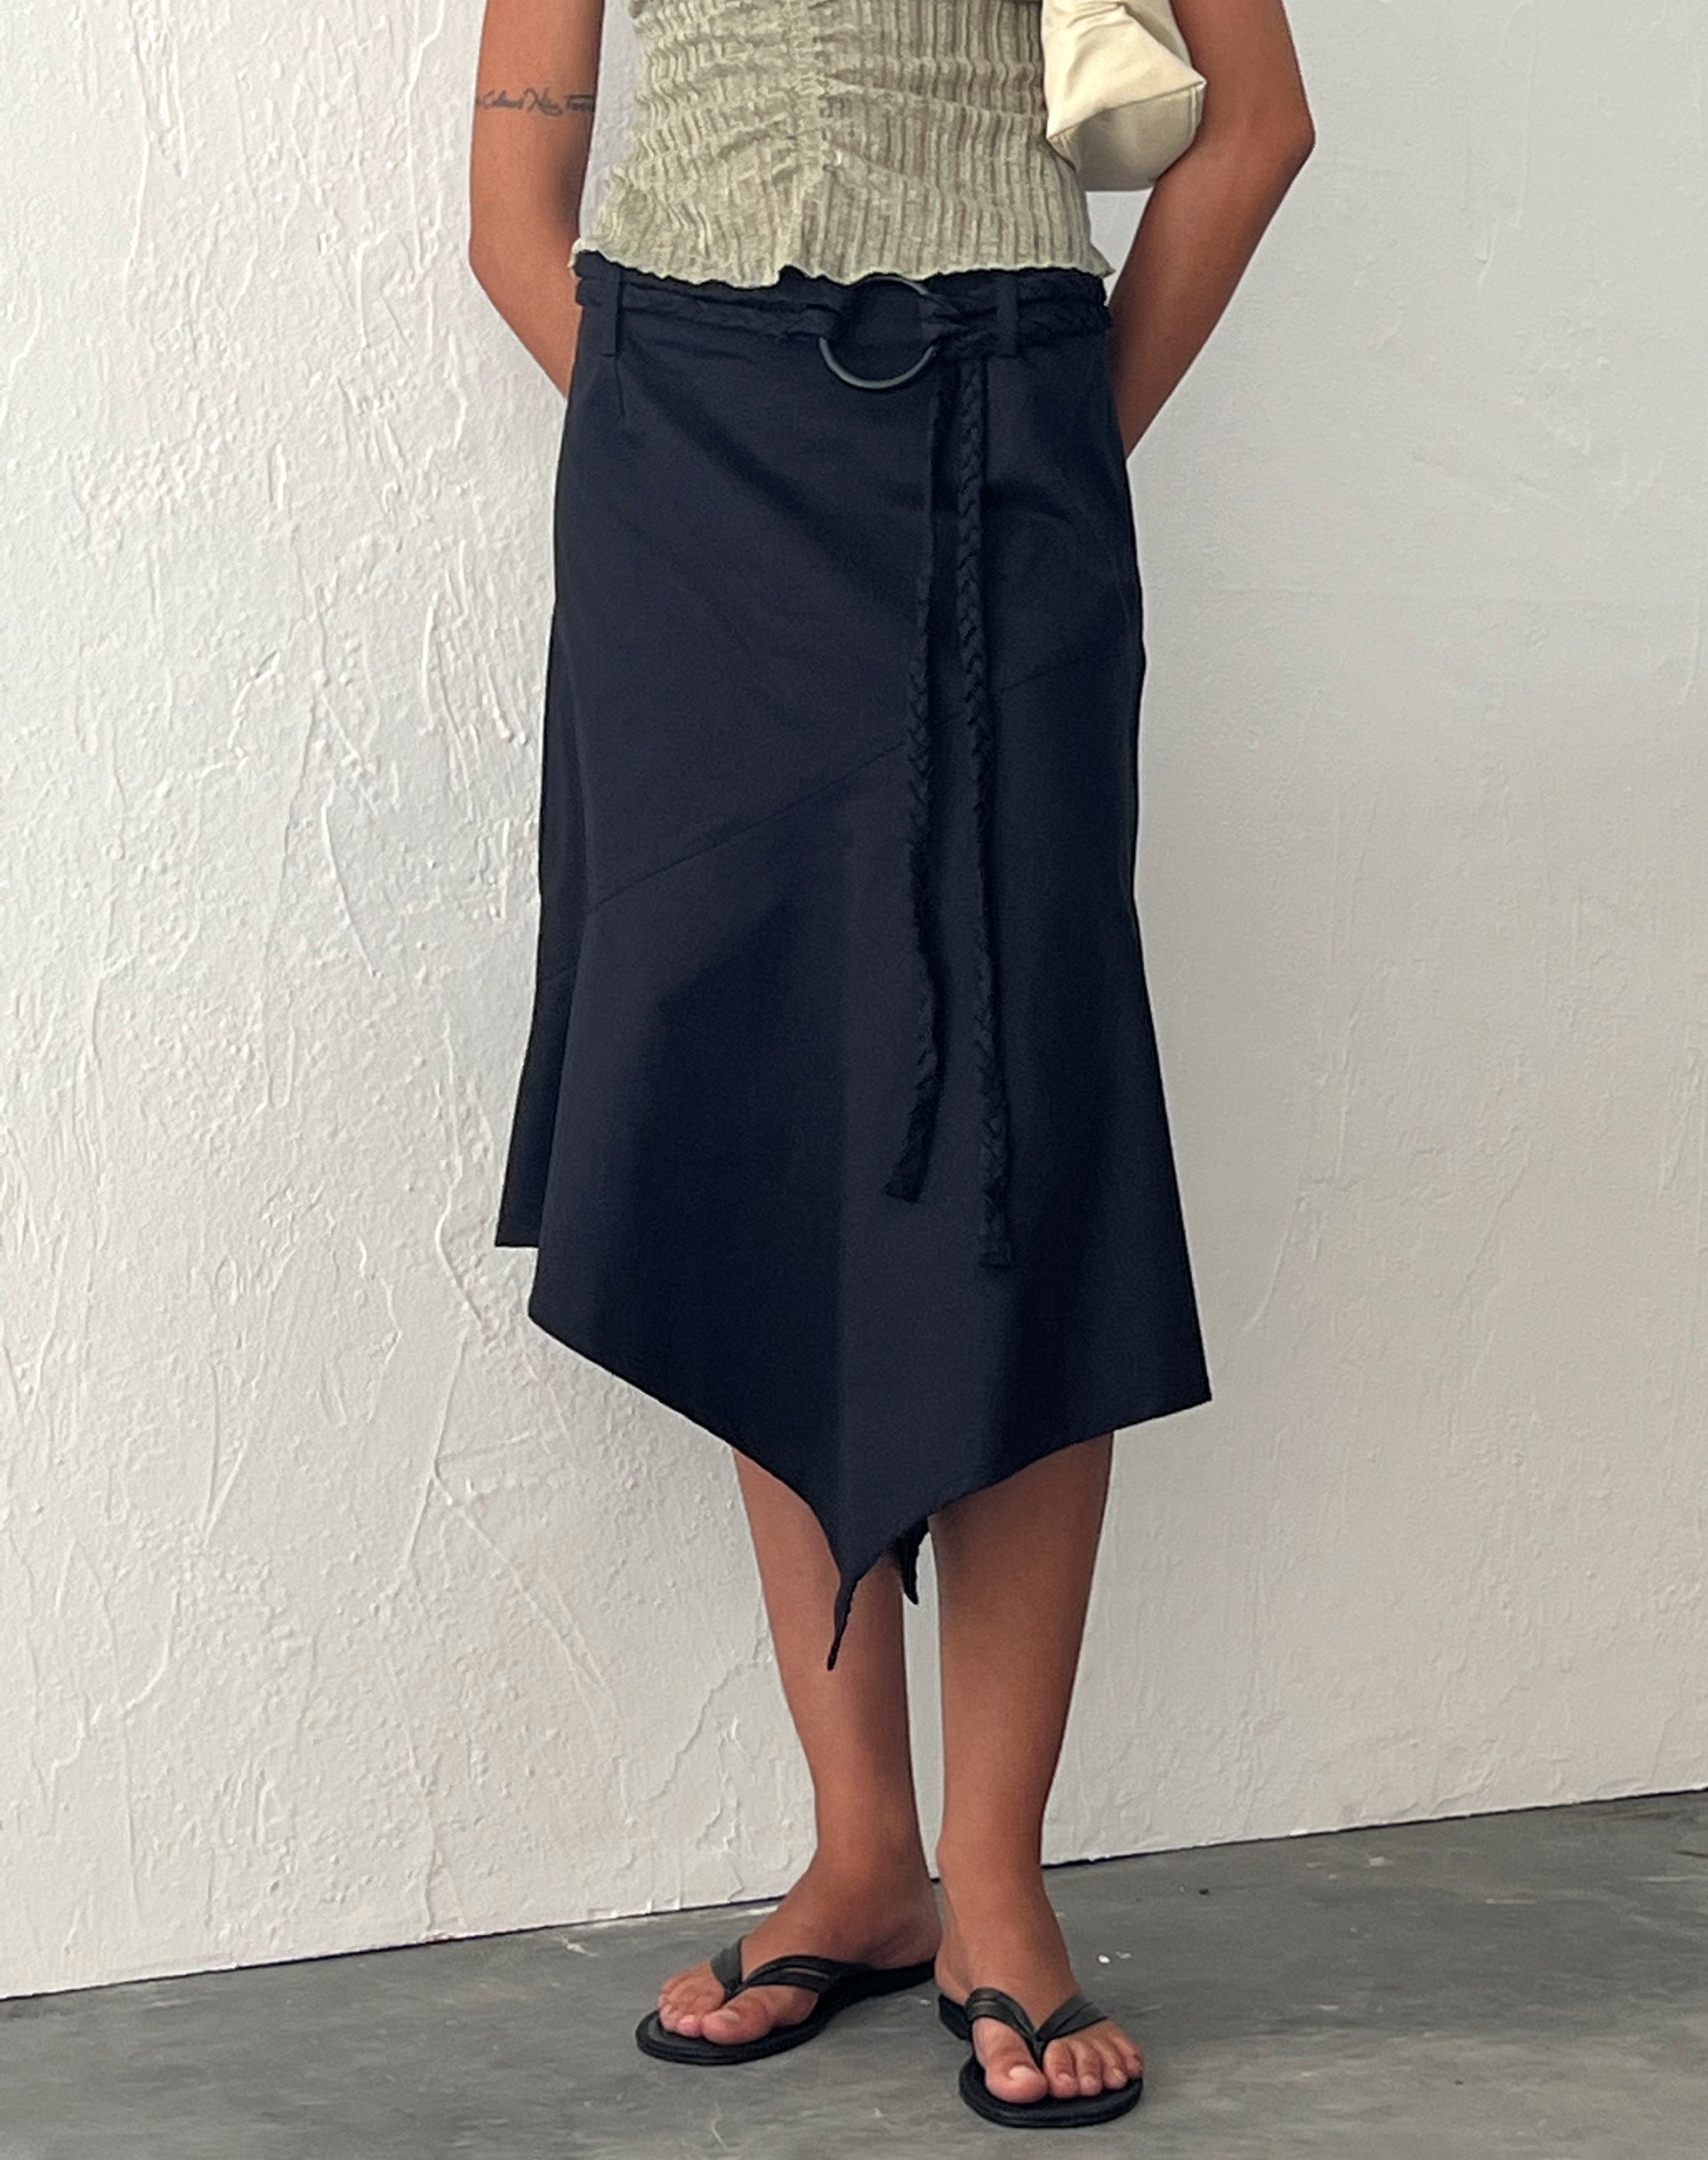 Image of Nejusi Asymmetric Midi Skirt in Black with Braided Belt